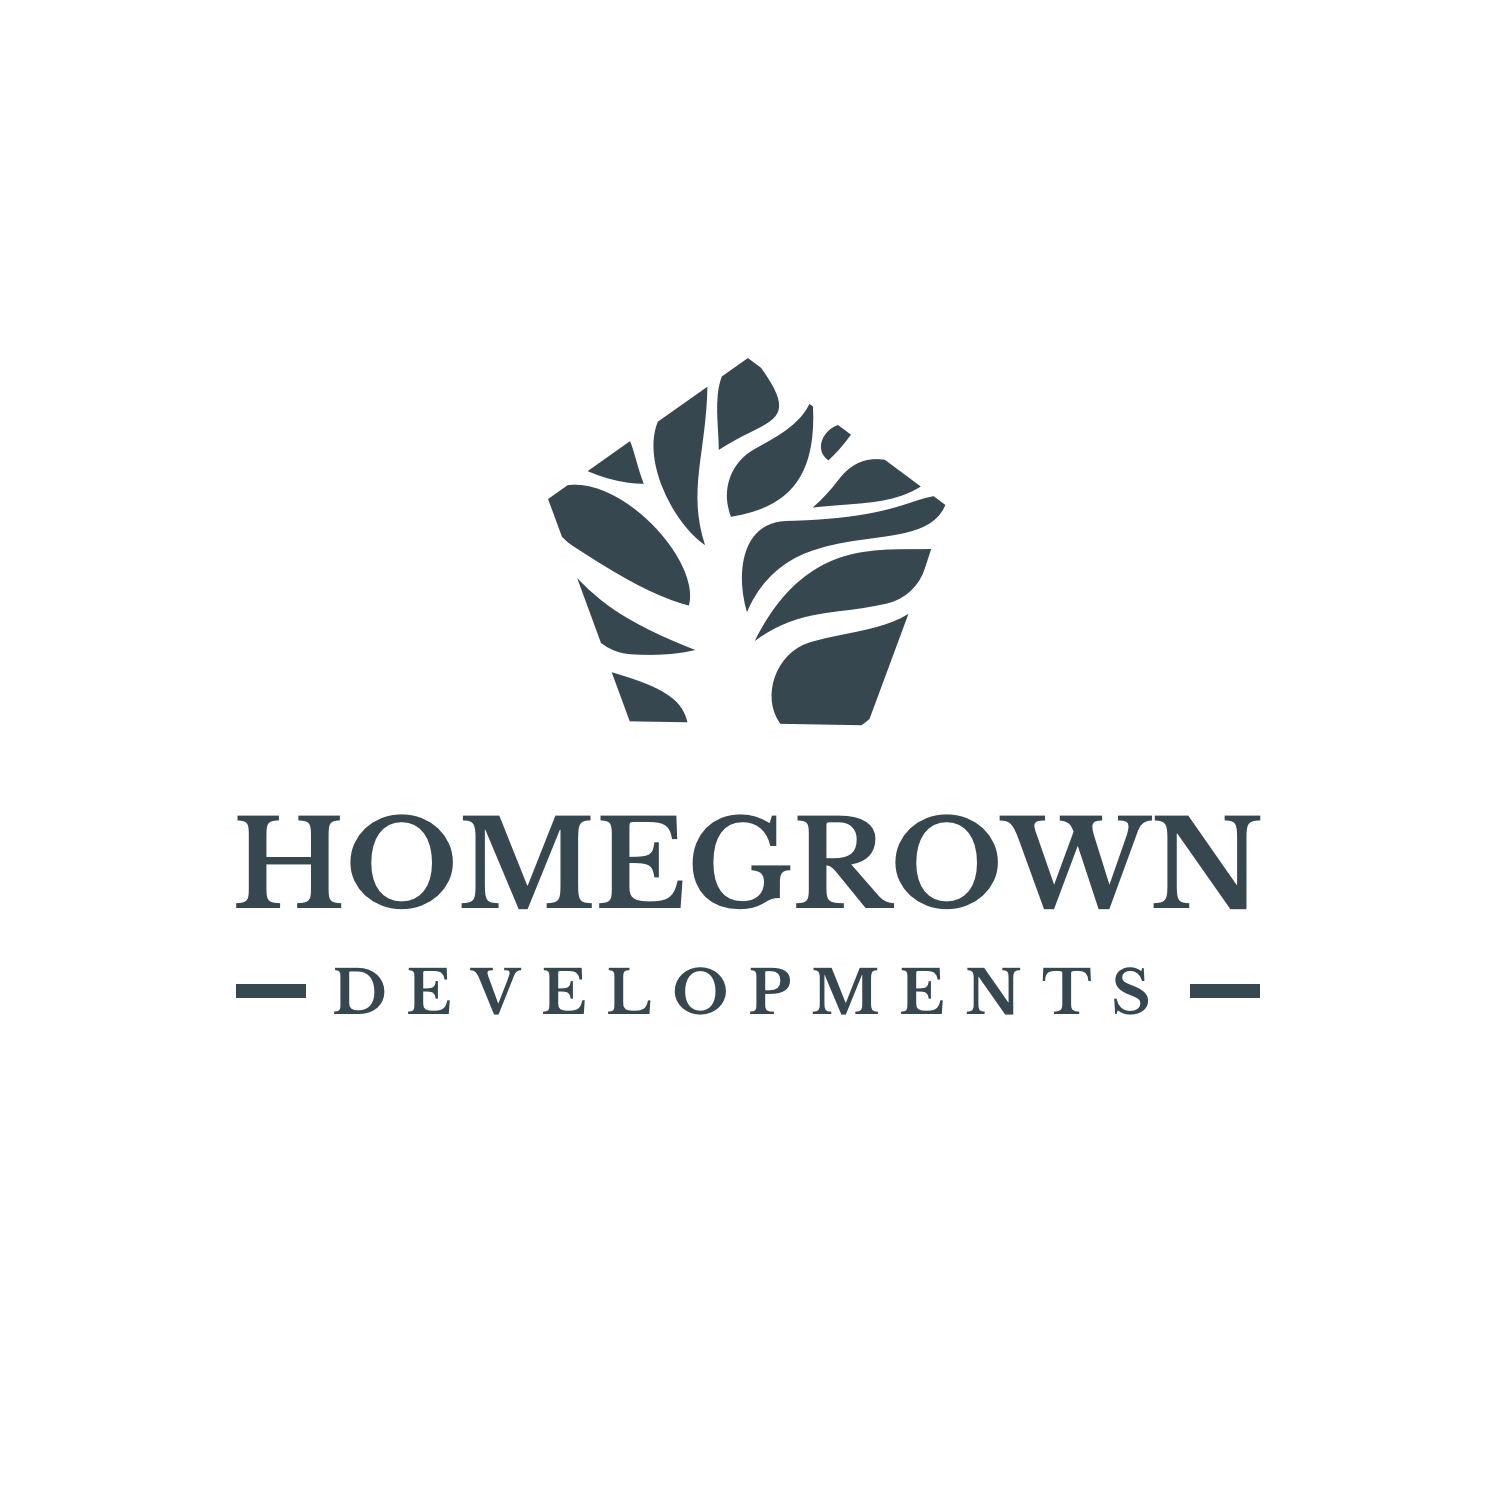 Homegrown Property Development - Logo.png